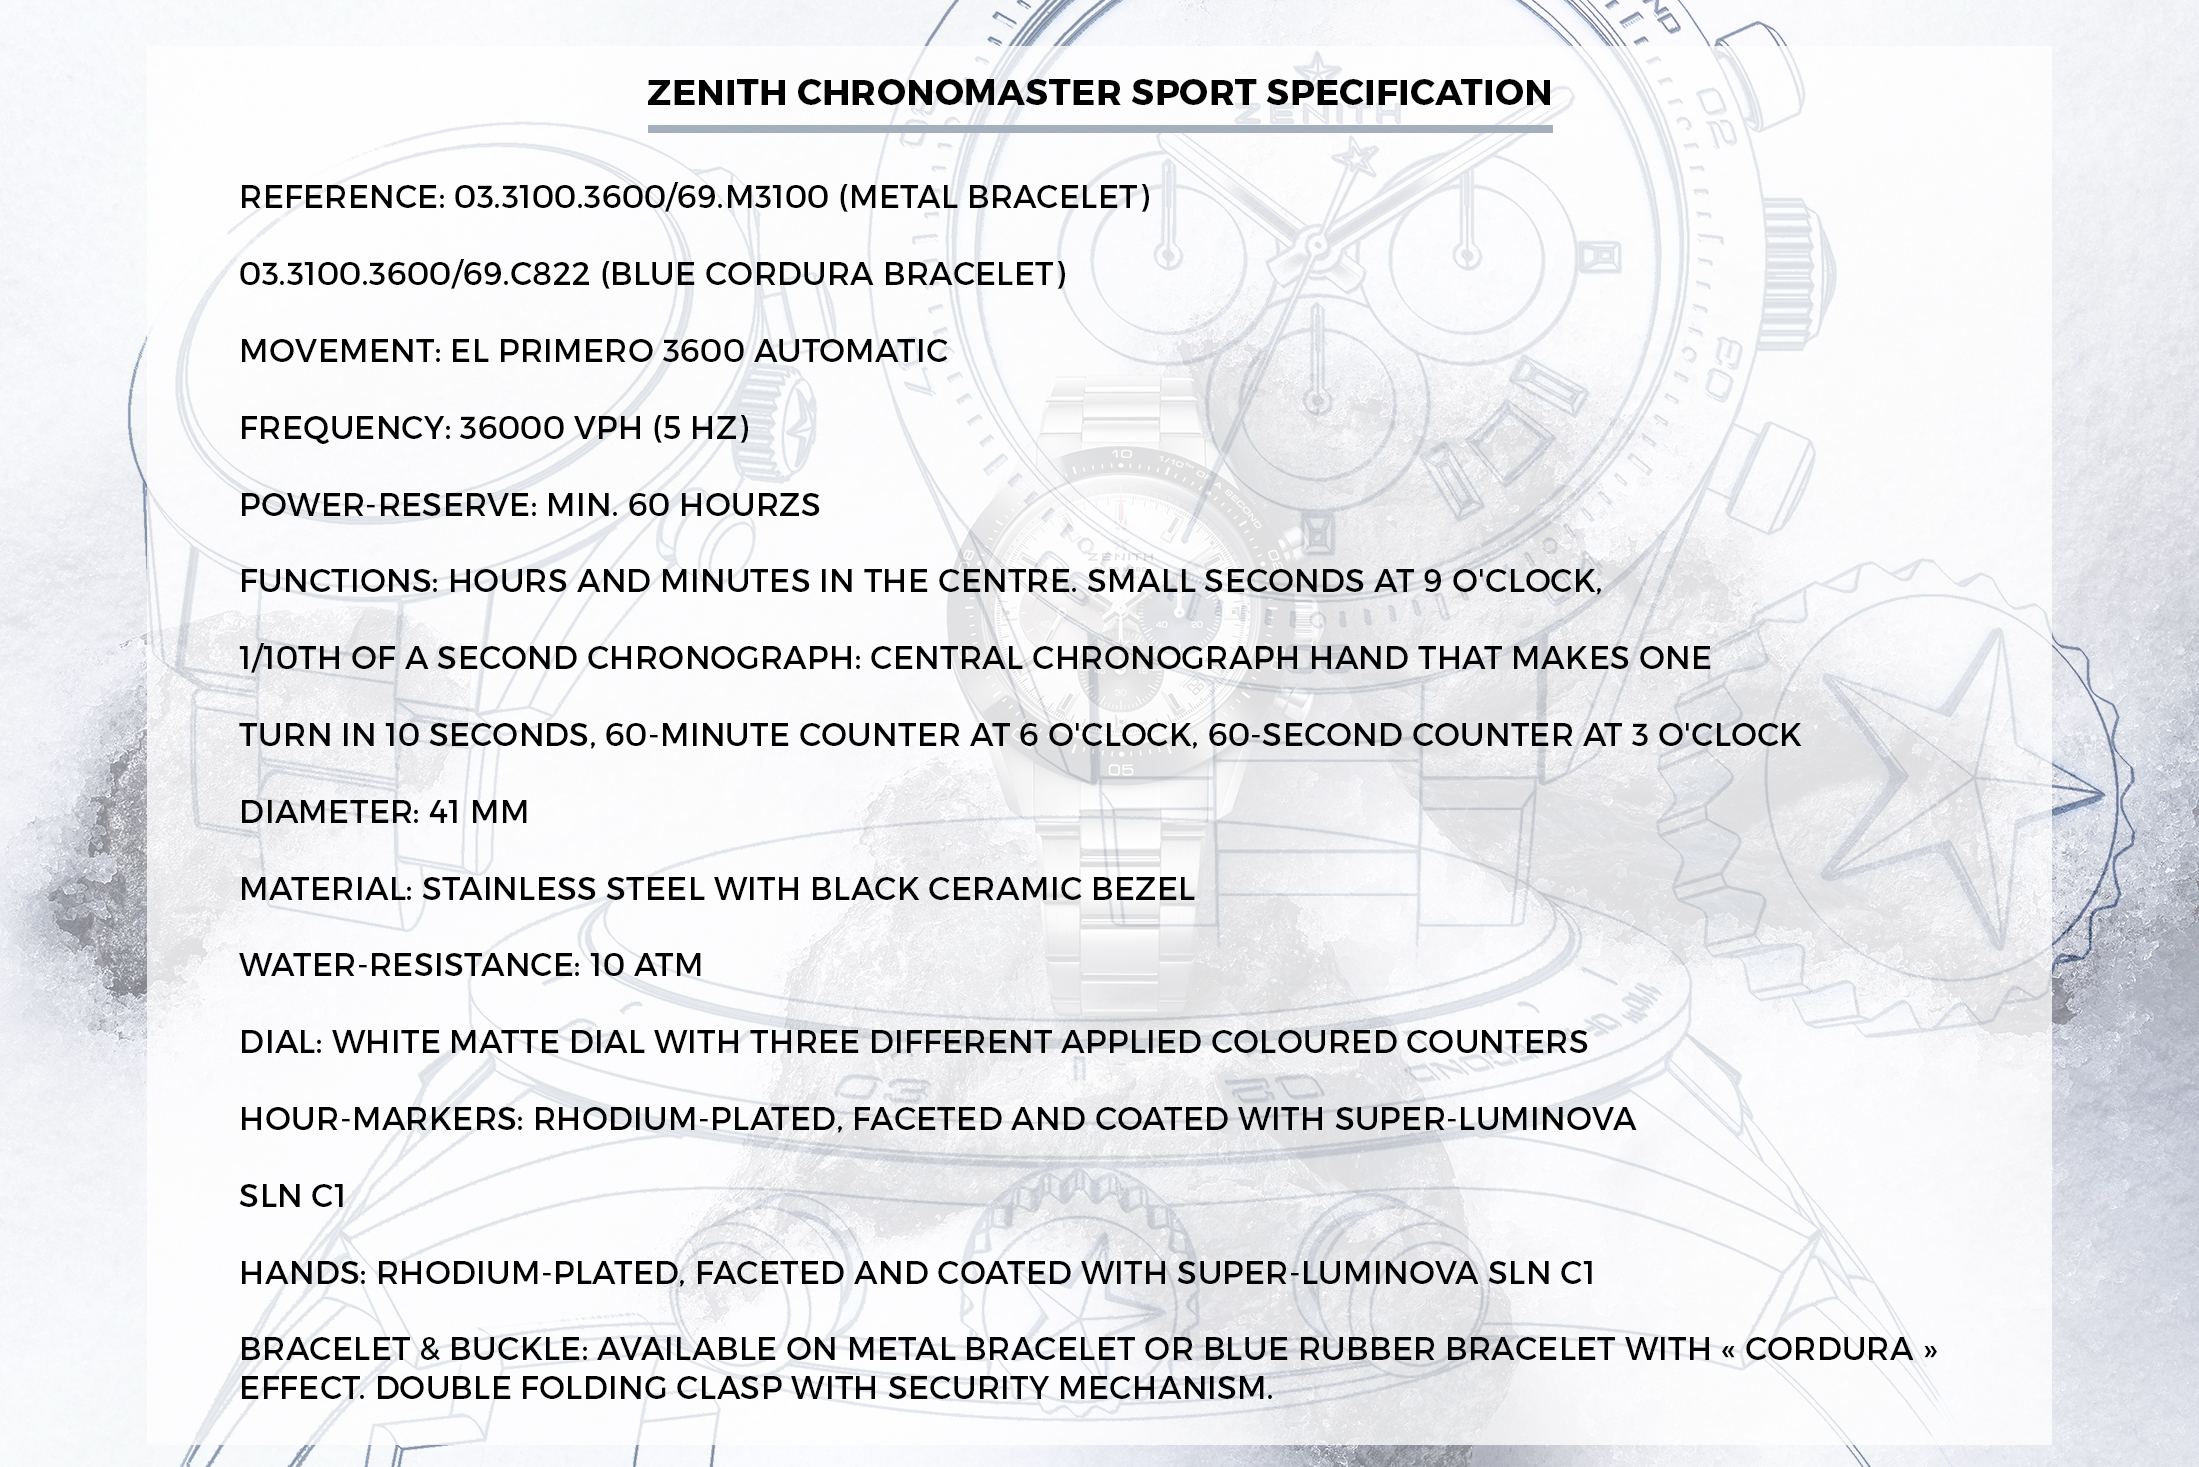 The Specs Of The Zenith Chronomaster Sport